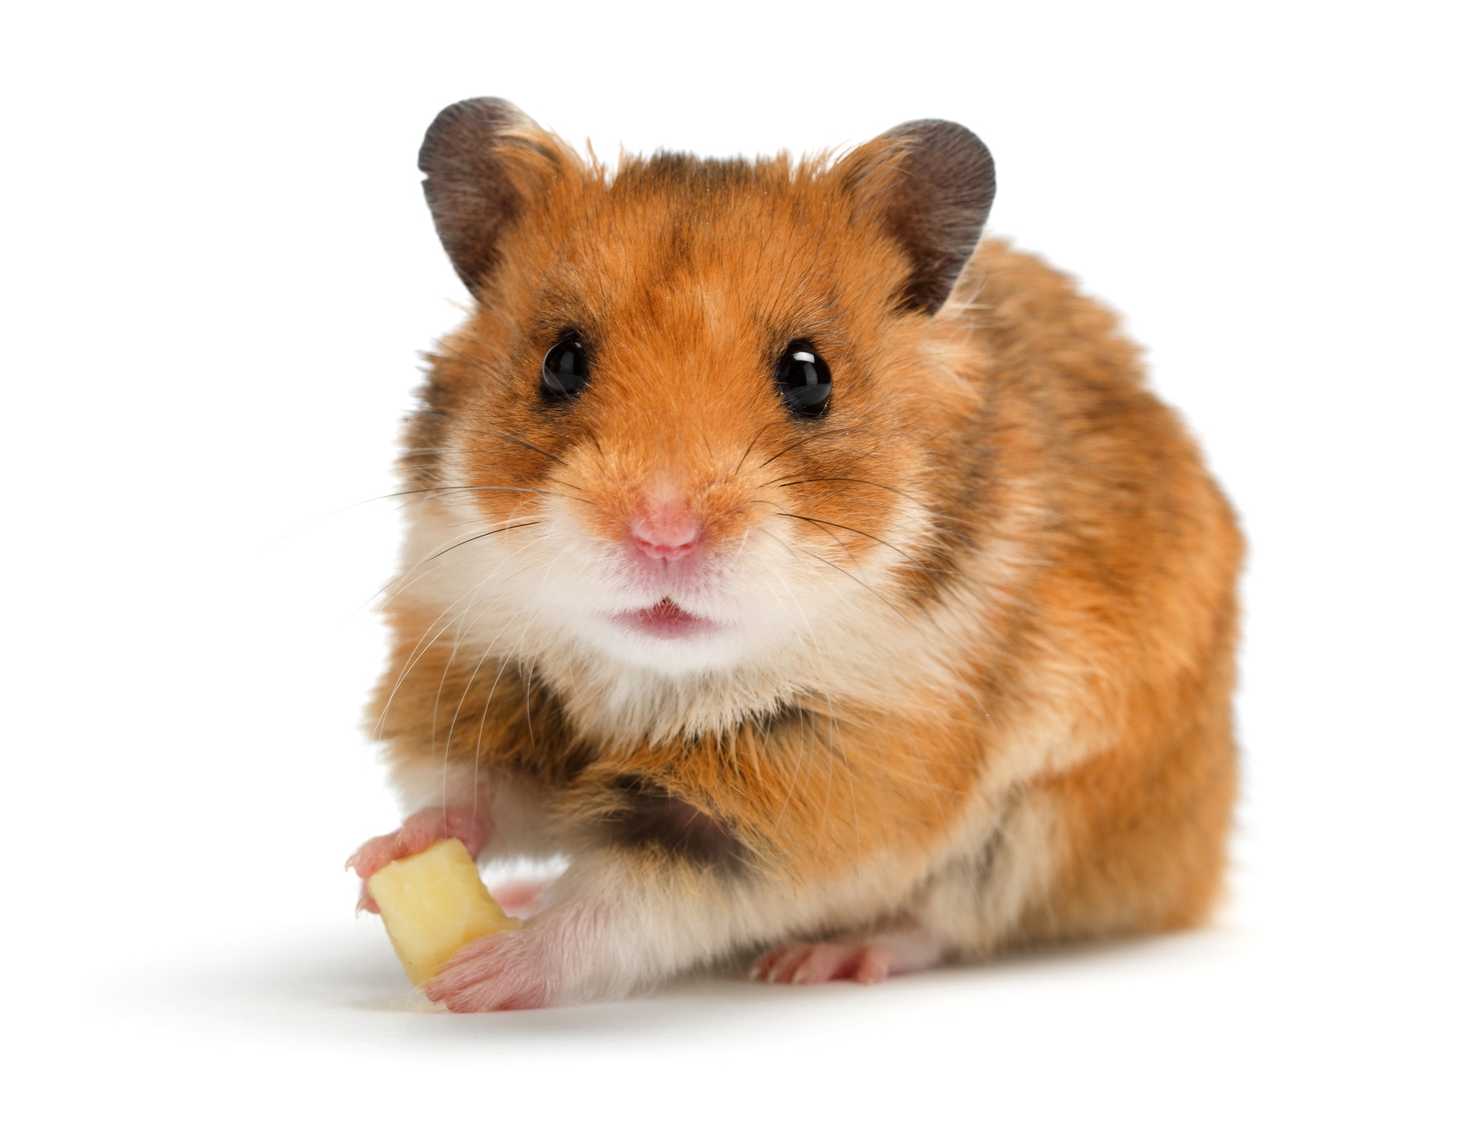 Go Amherst Hamsters? Mass. college mulls new mascots after nixing 'bioterrorist' Lord Jeff. - Washington Post